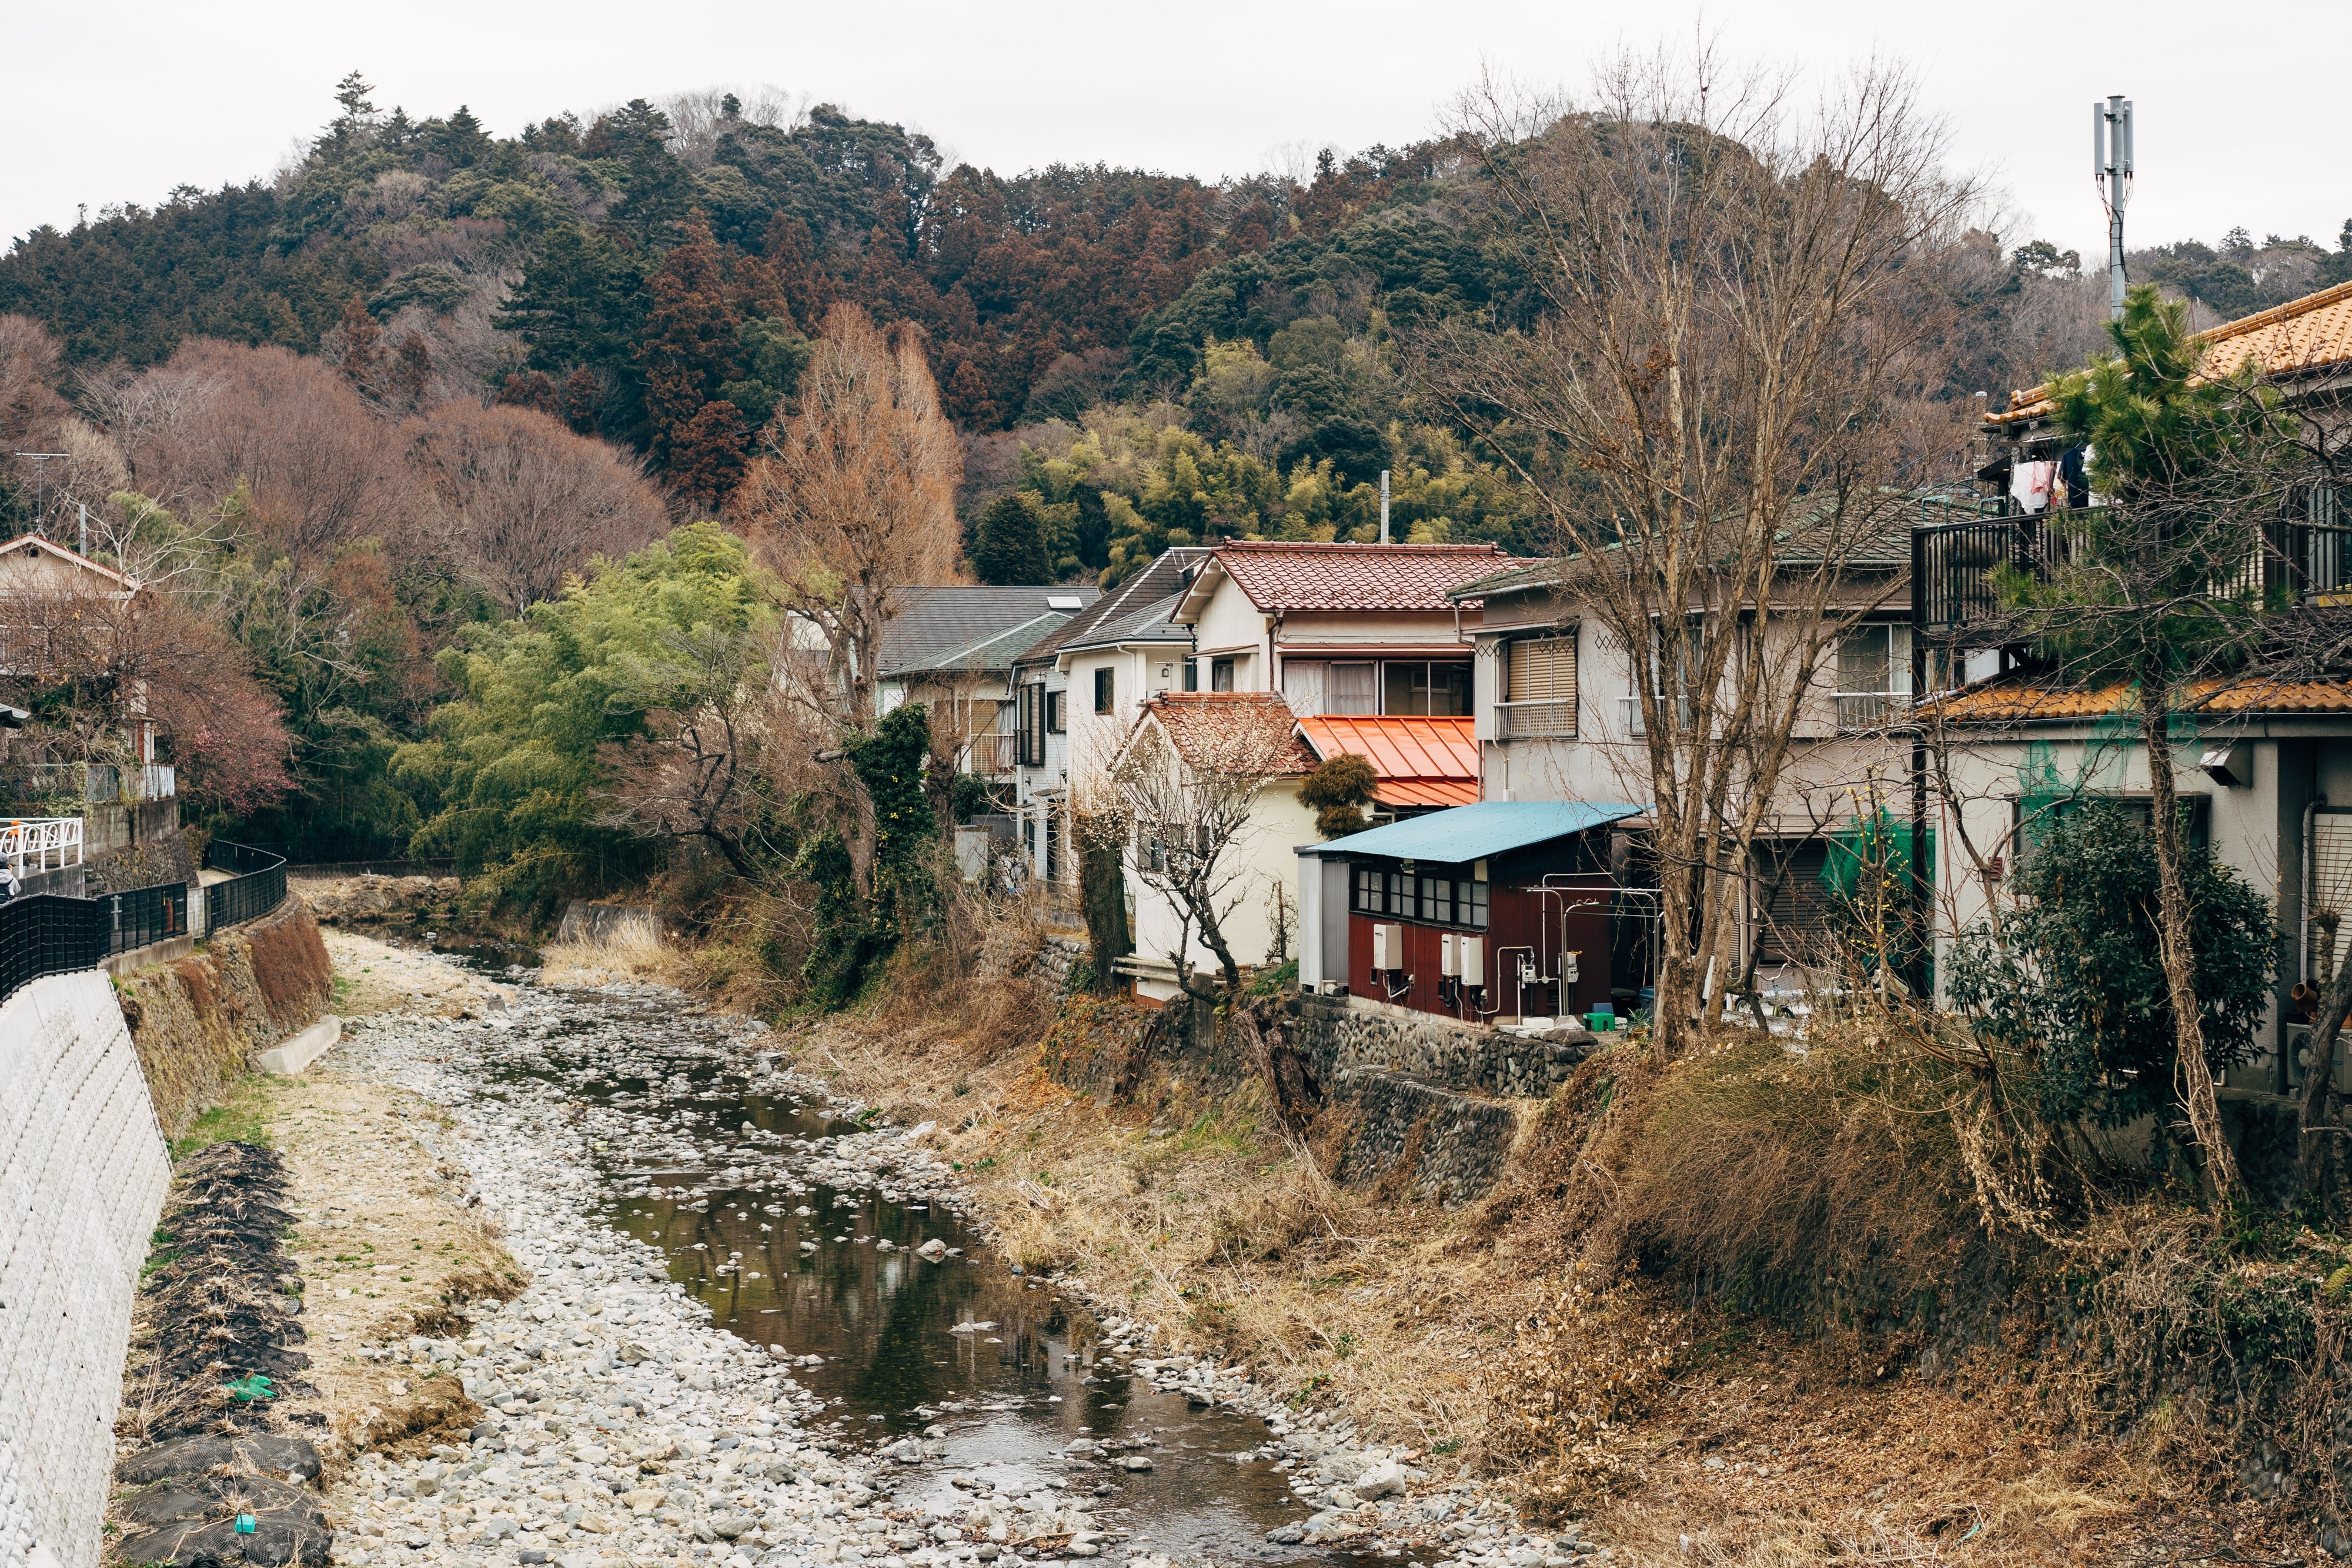 A Japanese village along a river